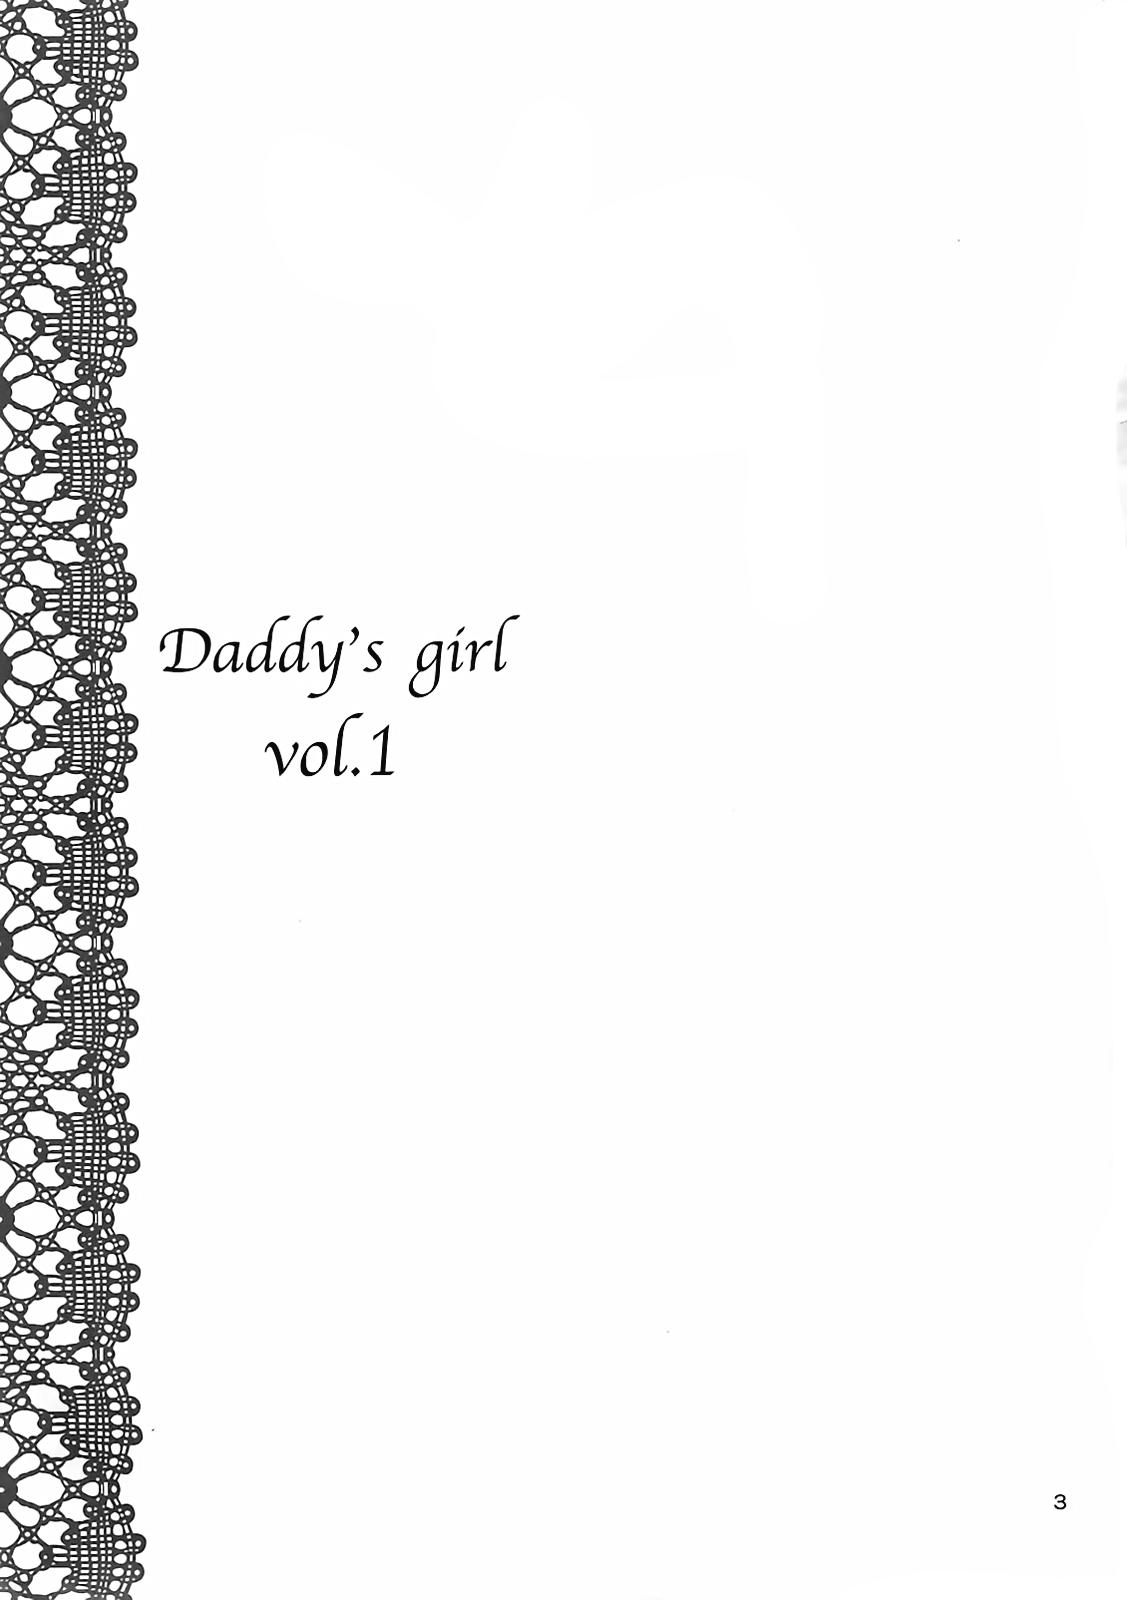 DG - Daddy's Girl Vol. 1 4